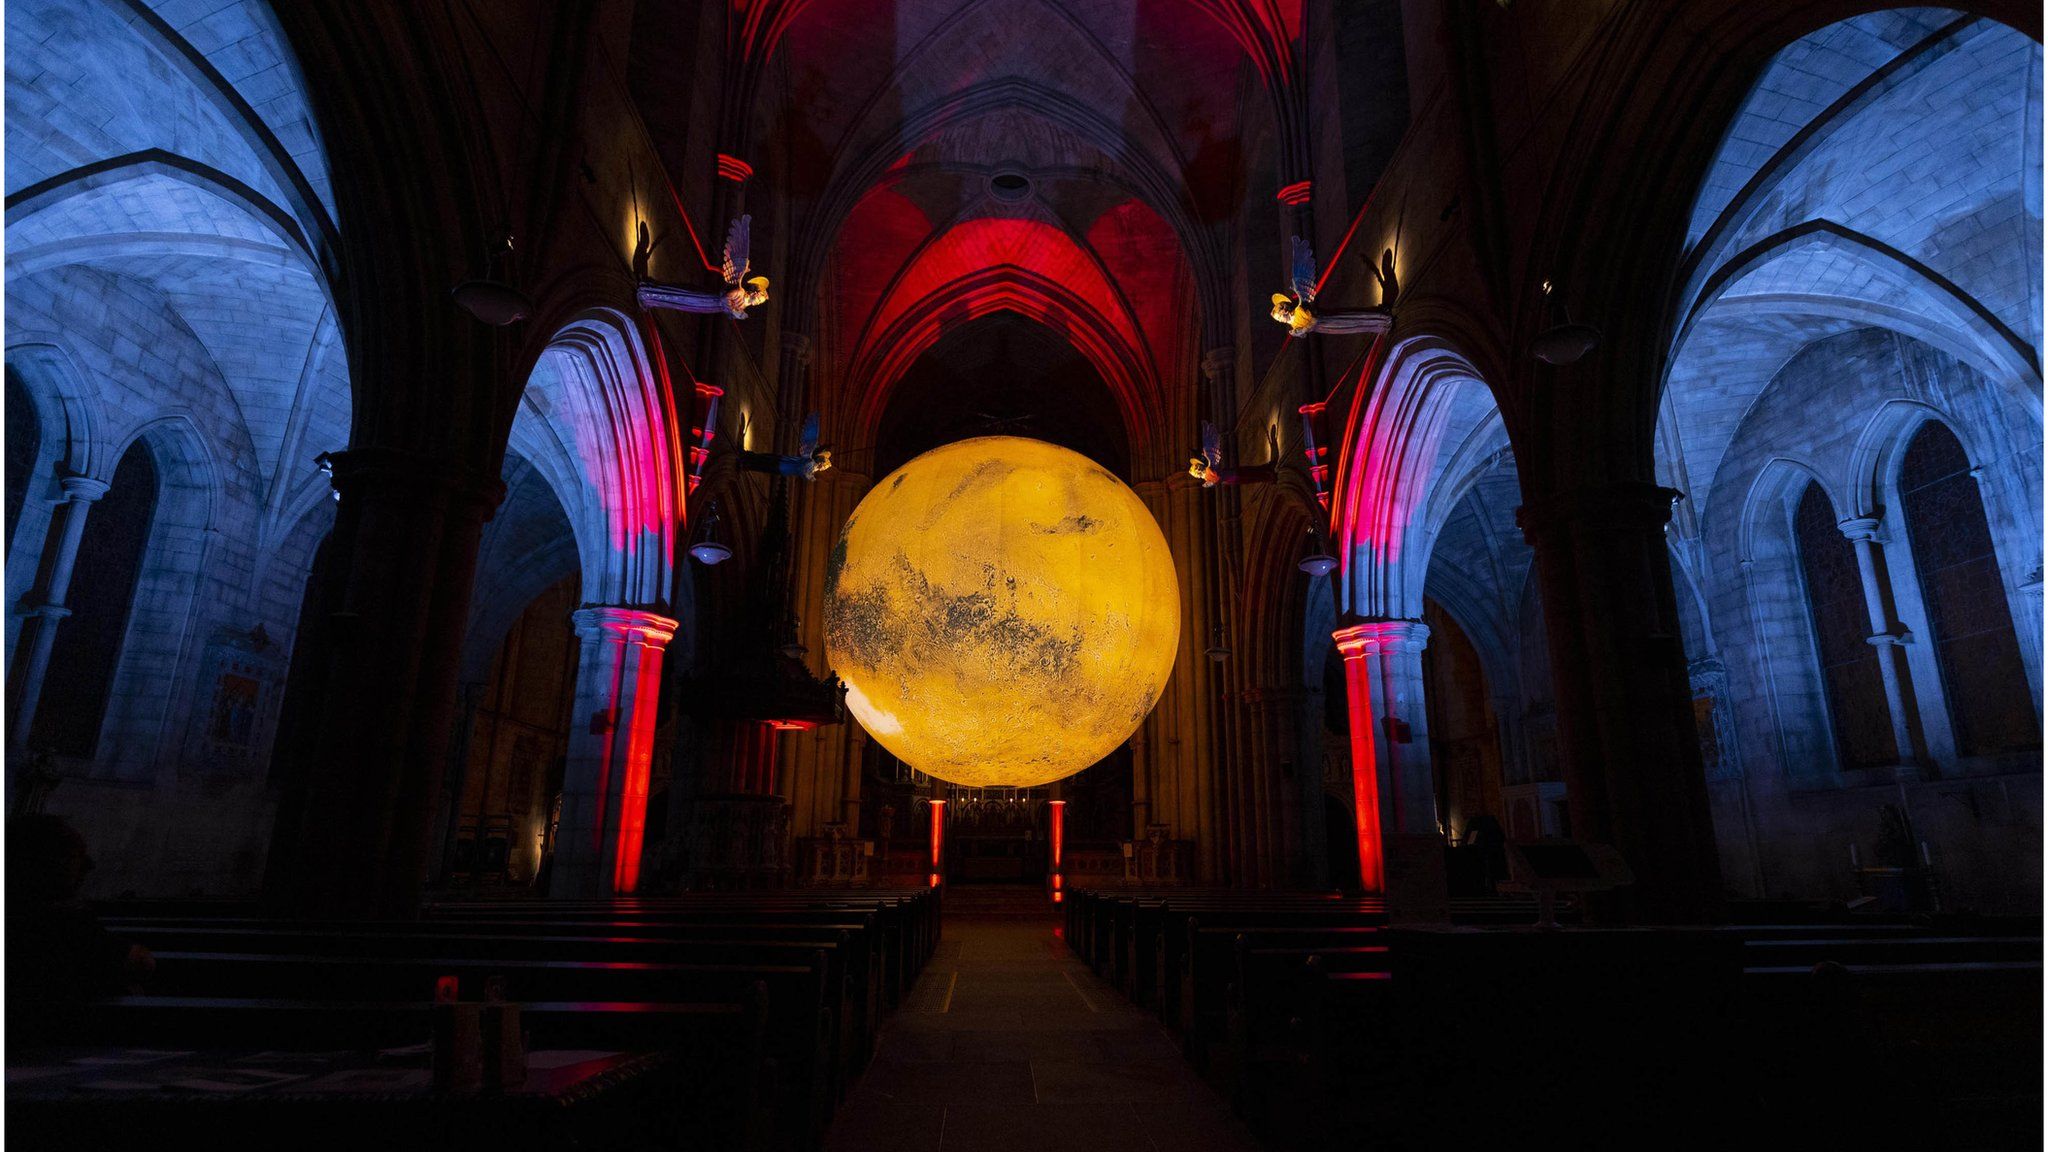 A big art installation in a dark glowing room that displays planet Mars